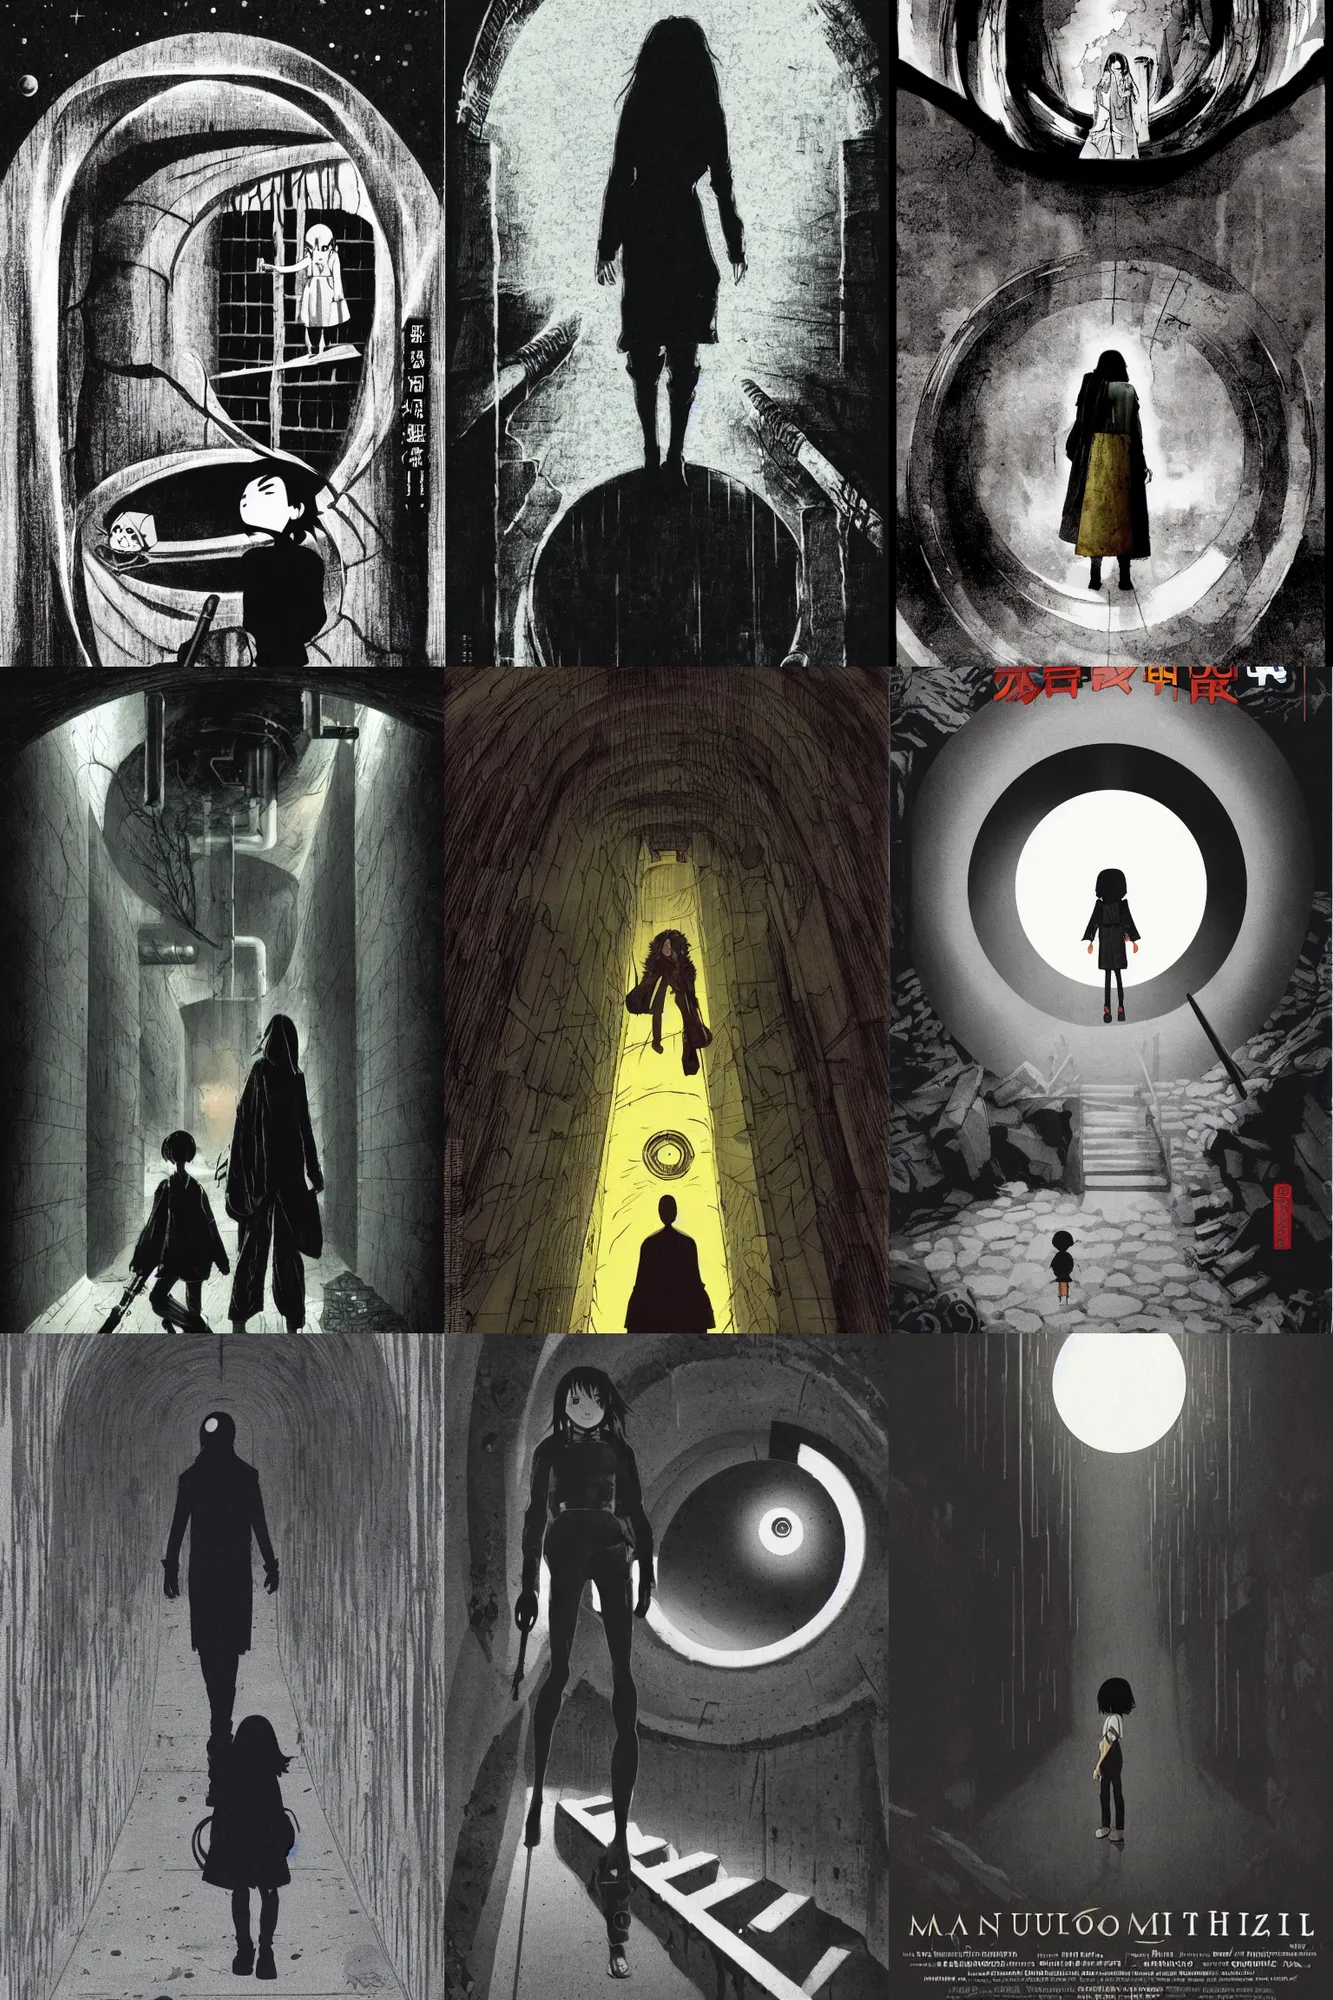 Prompt: mamoru oshii miyazaki movie poster, brutalist, girl outside a dark sewer entrance, six foot sewer pipe, eclipse, vanta black, entrance to a dark tunnel, black circle, black round hole, black depths